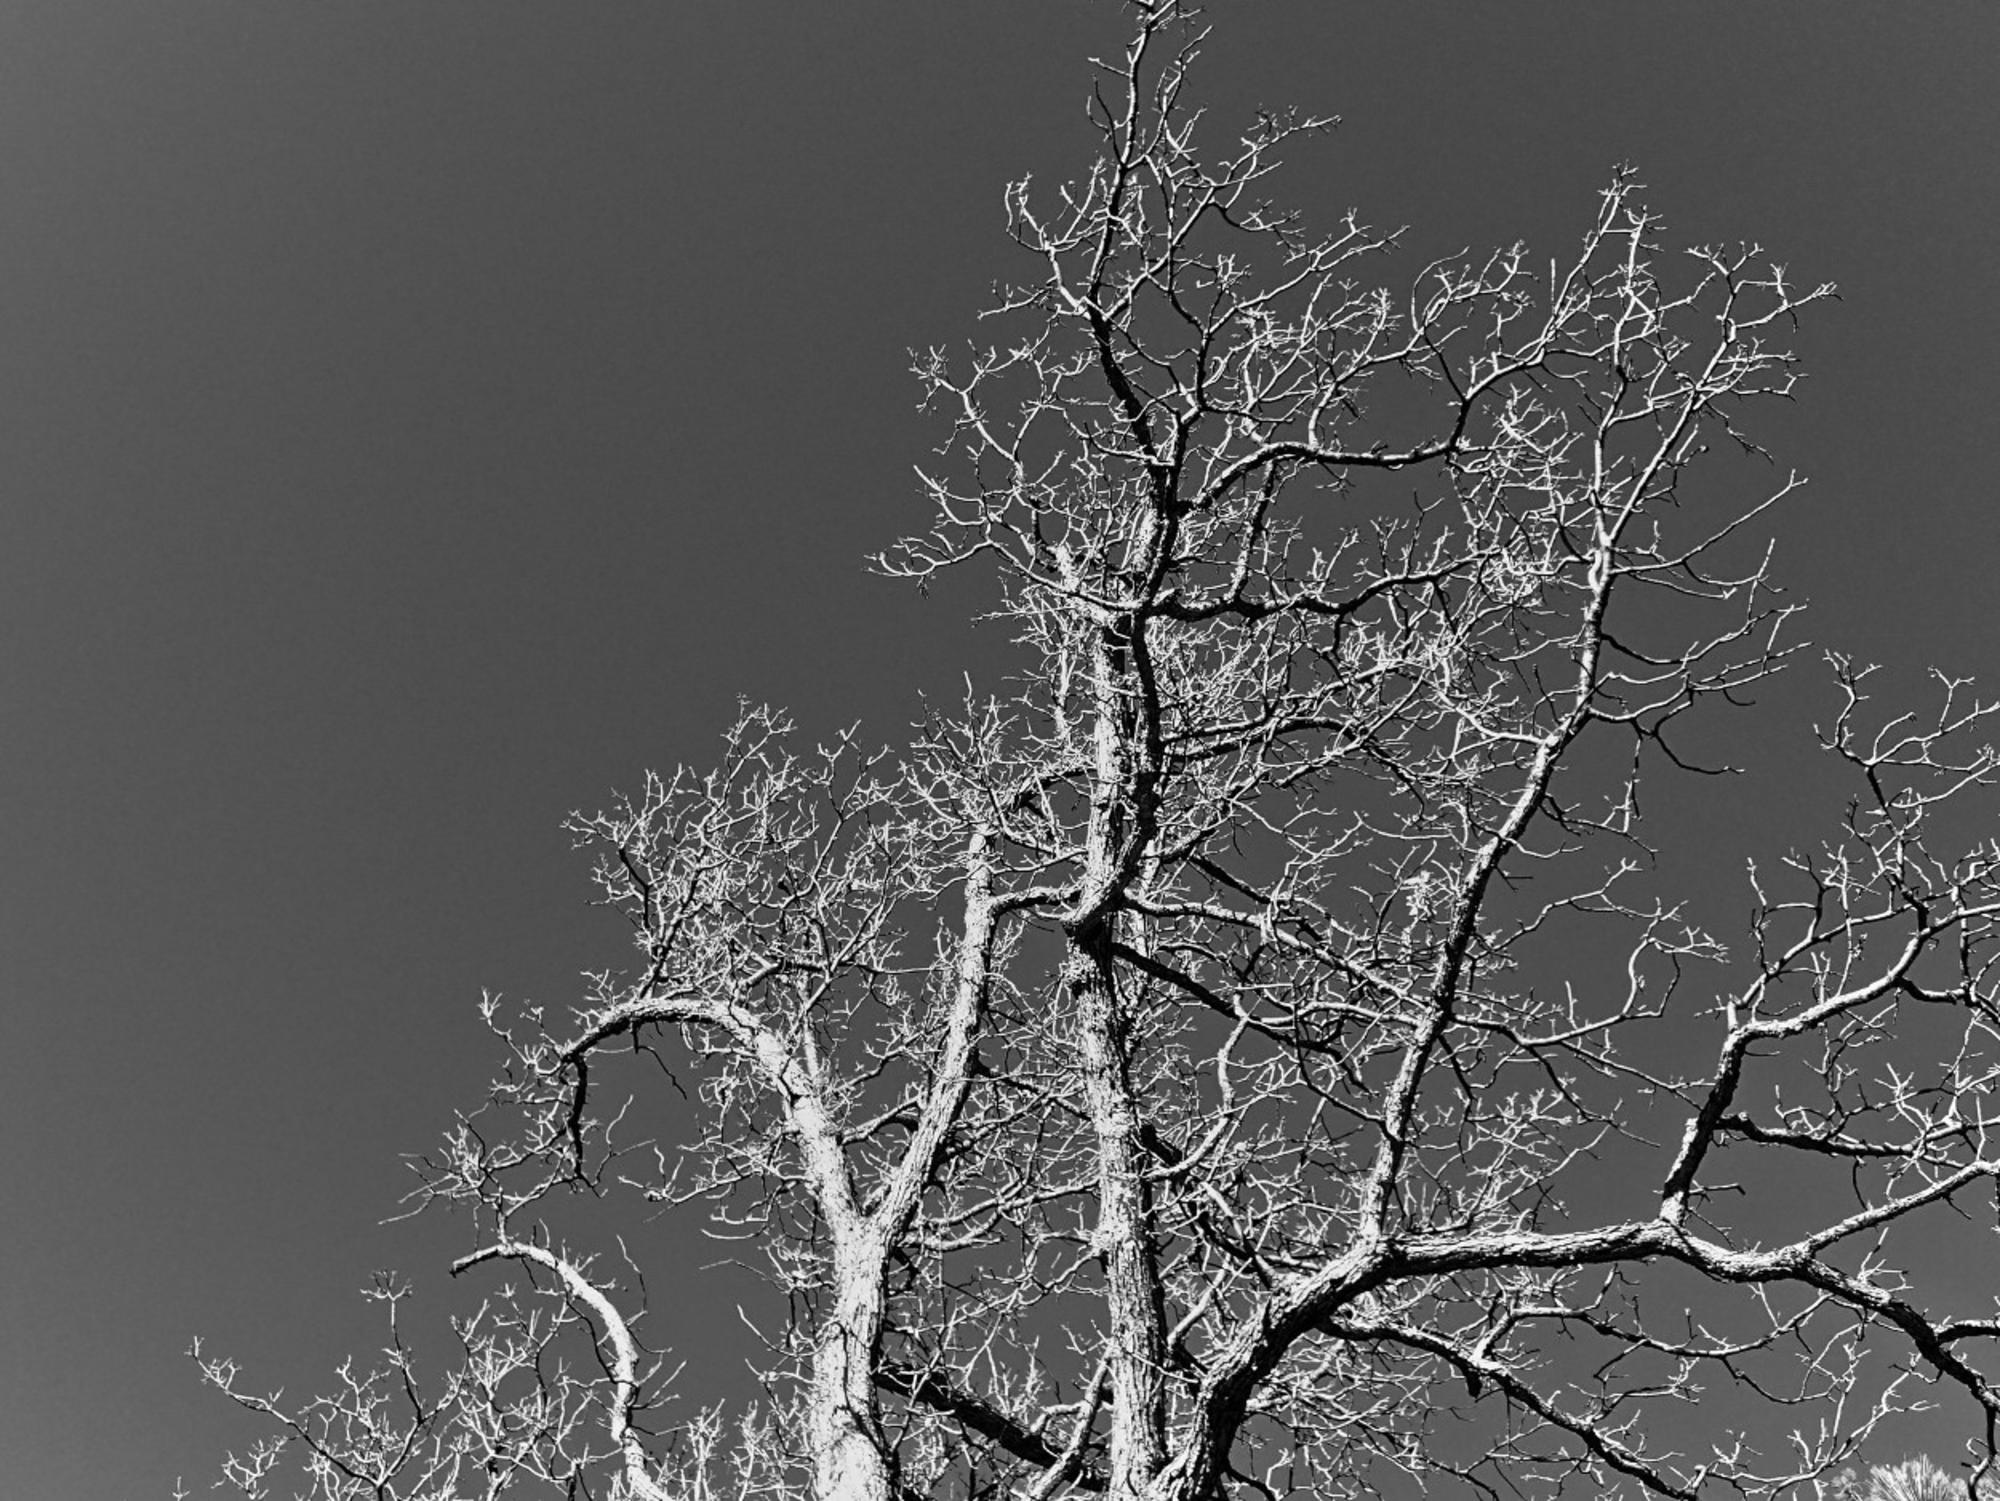 Fractal tree